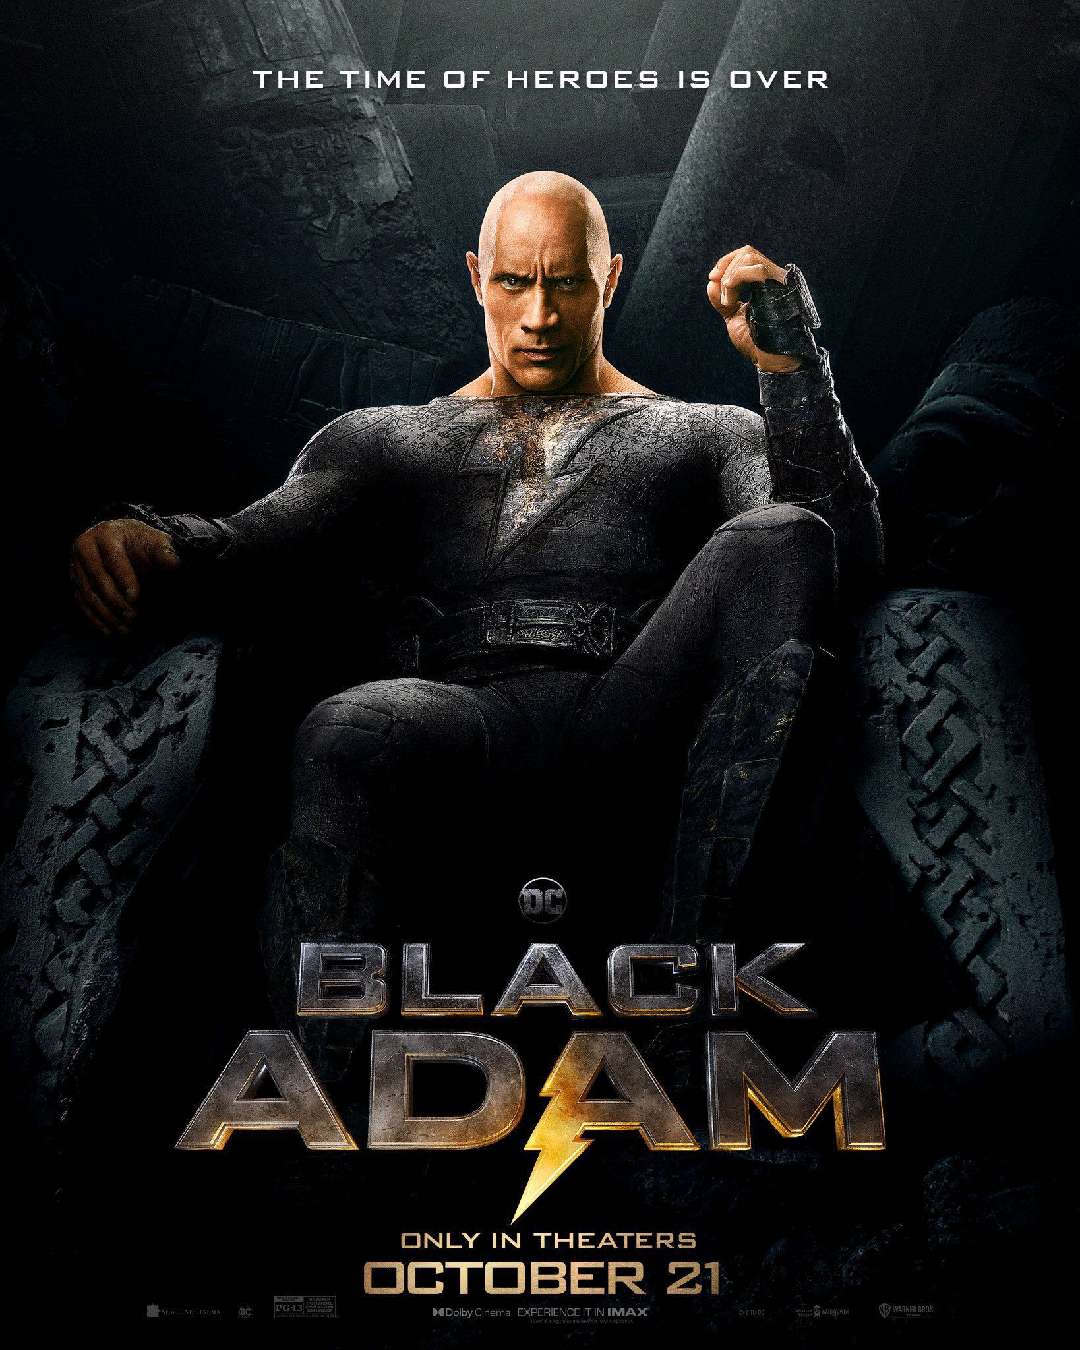 Dwayne Johnson Reigns Supreme in New ‘Black Adam’ Poster.